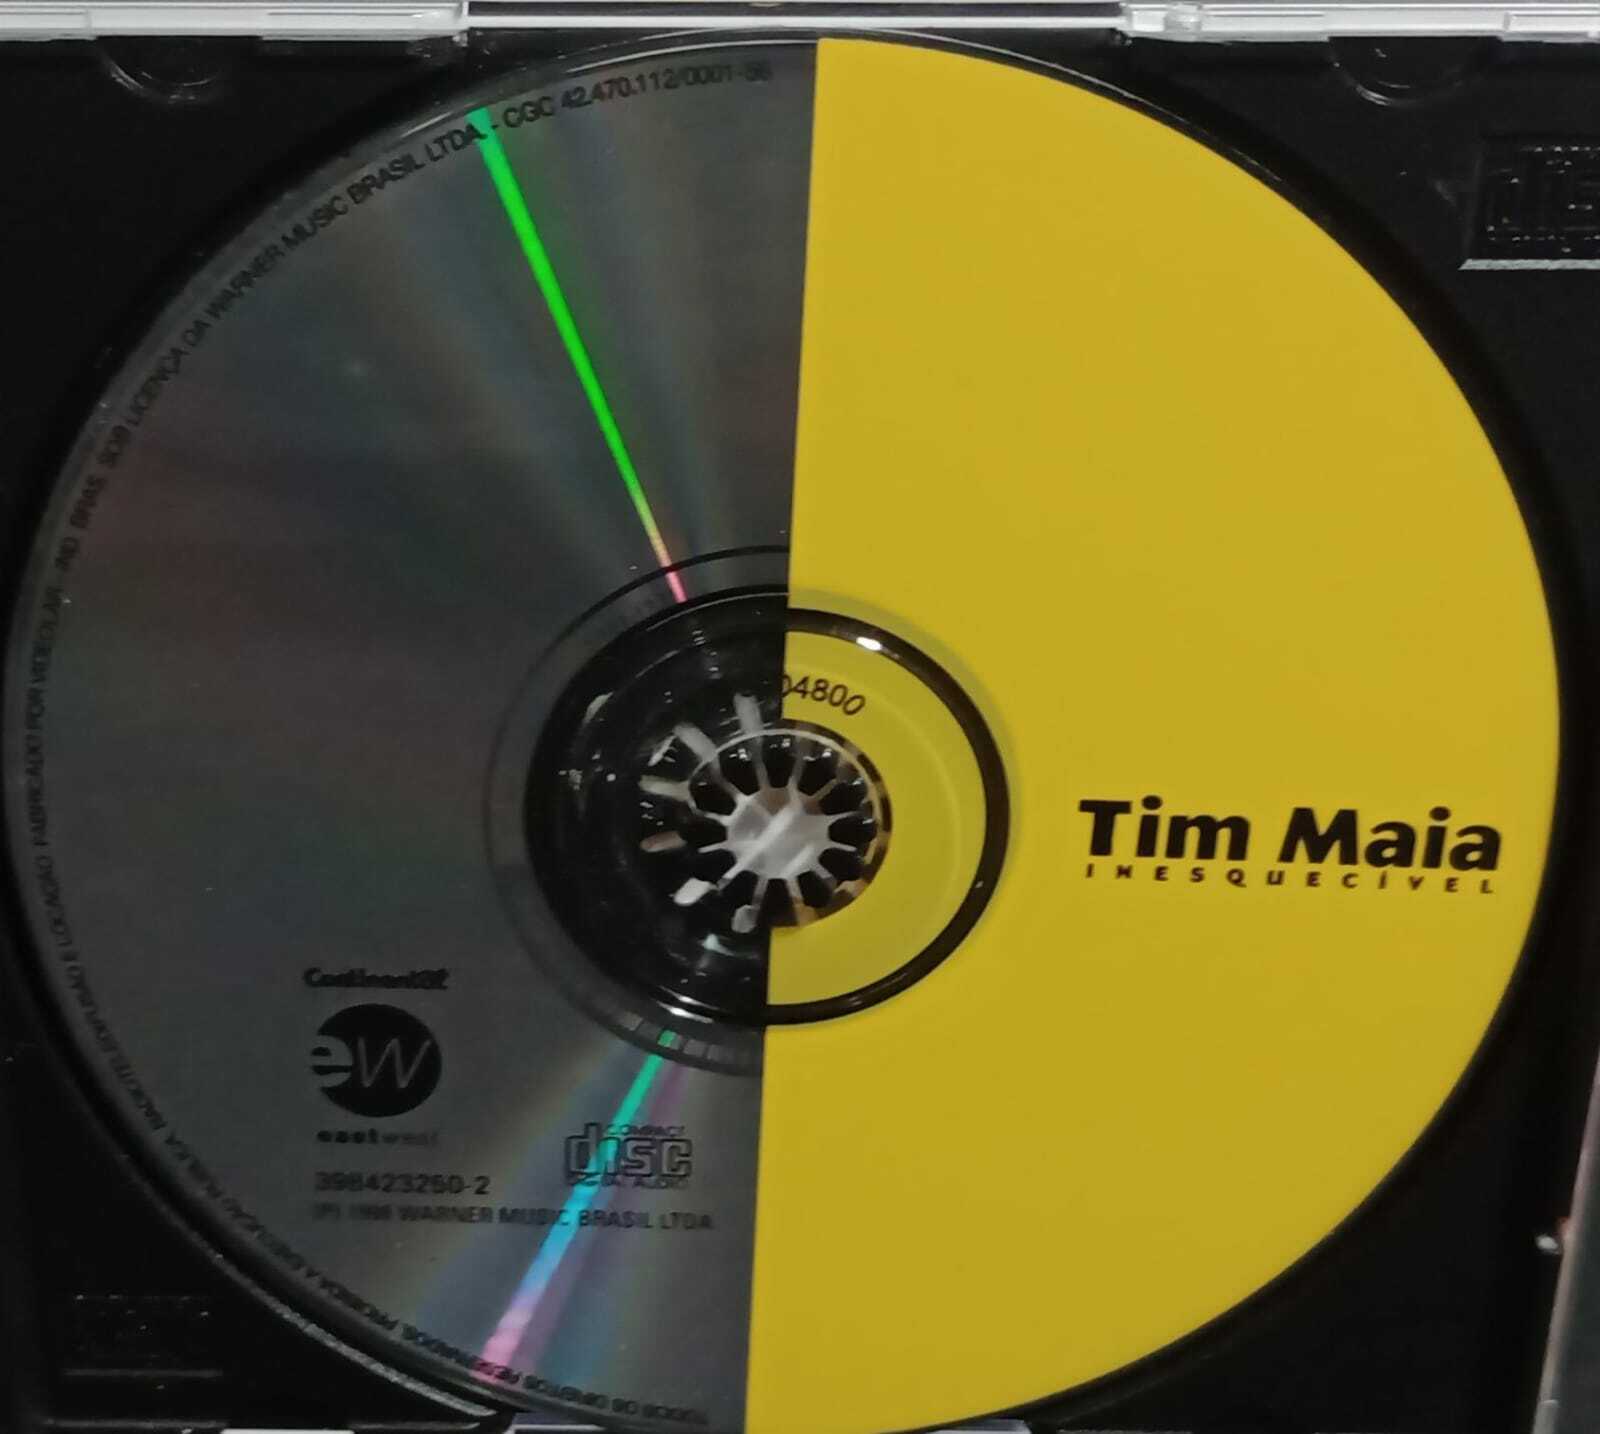 CD - Tim Maia - Inesquecível